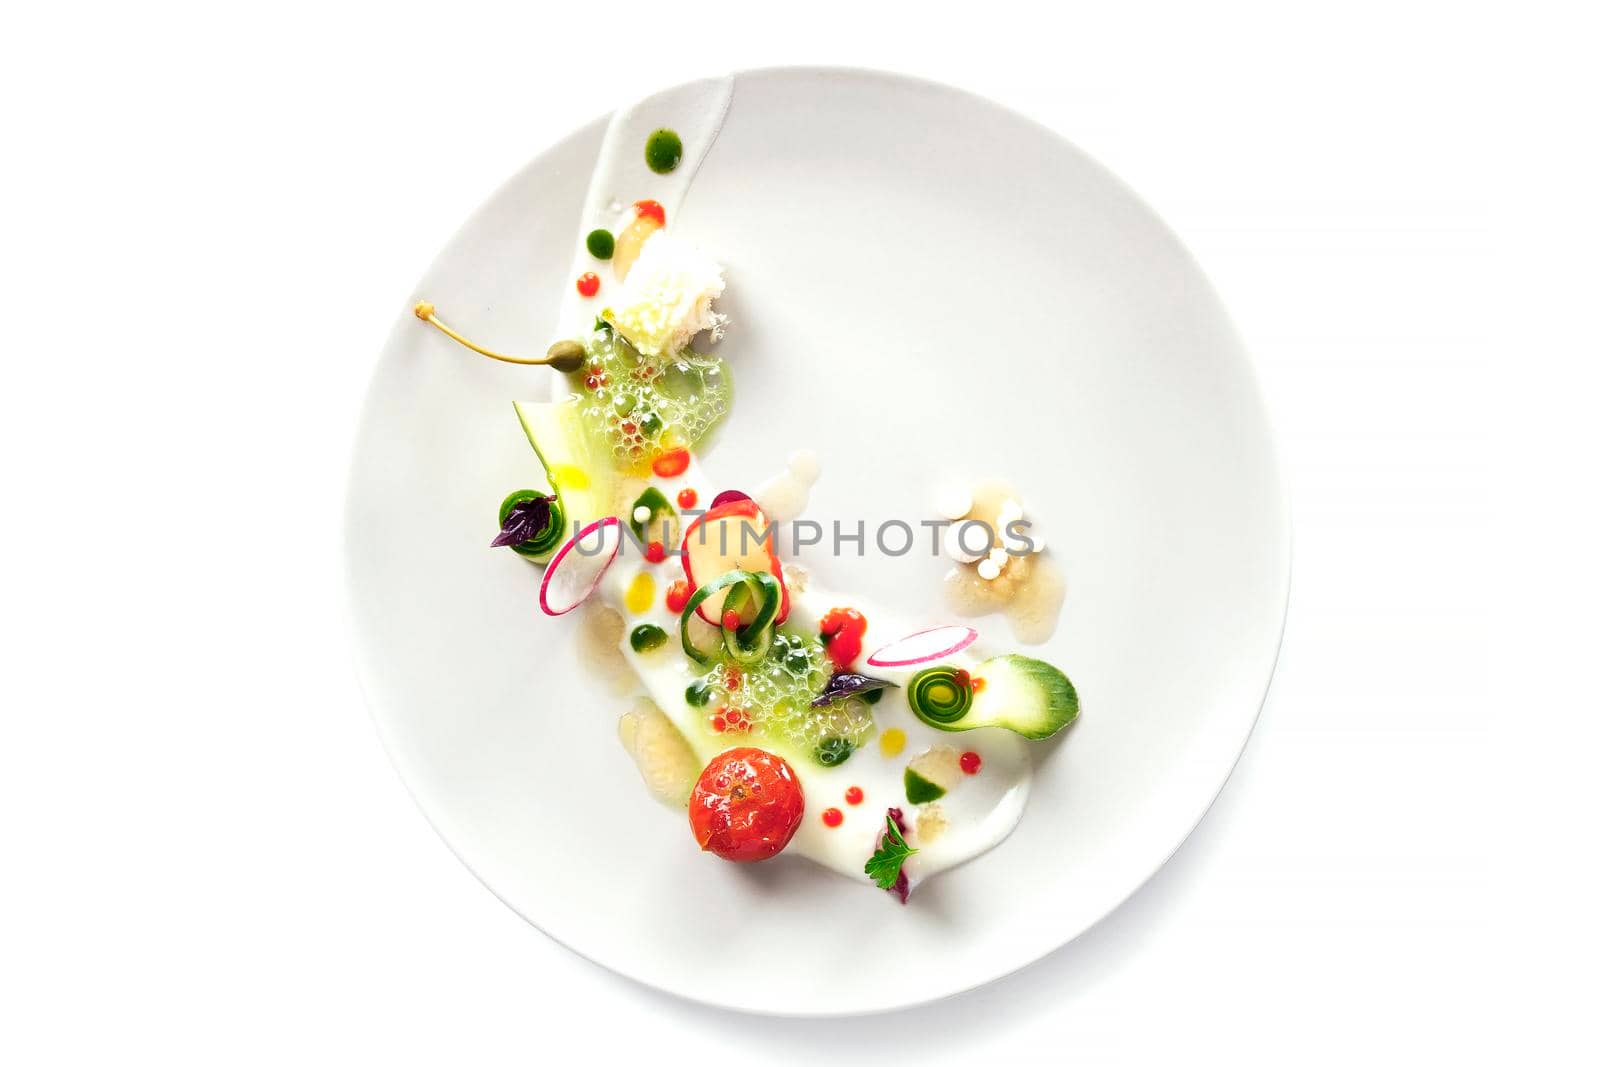 Molecular modern cuisine vegetable salad. Stock image. Isolated on white.